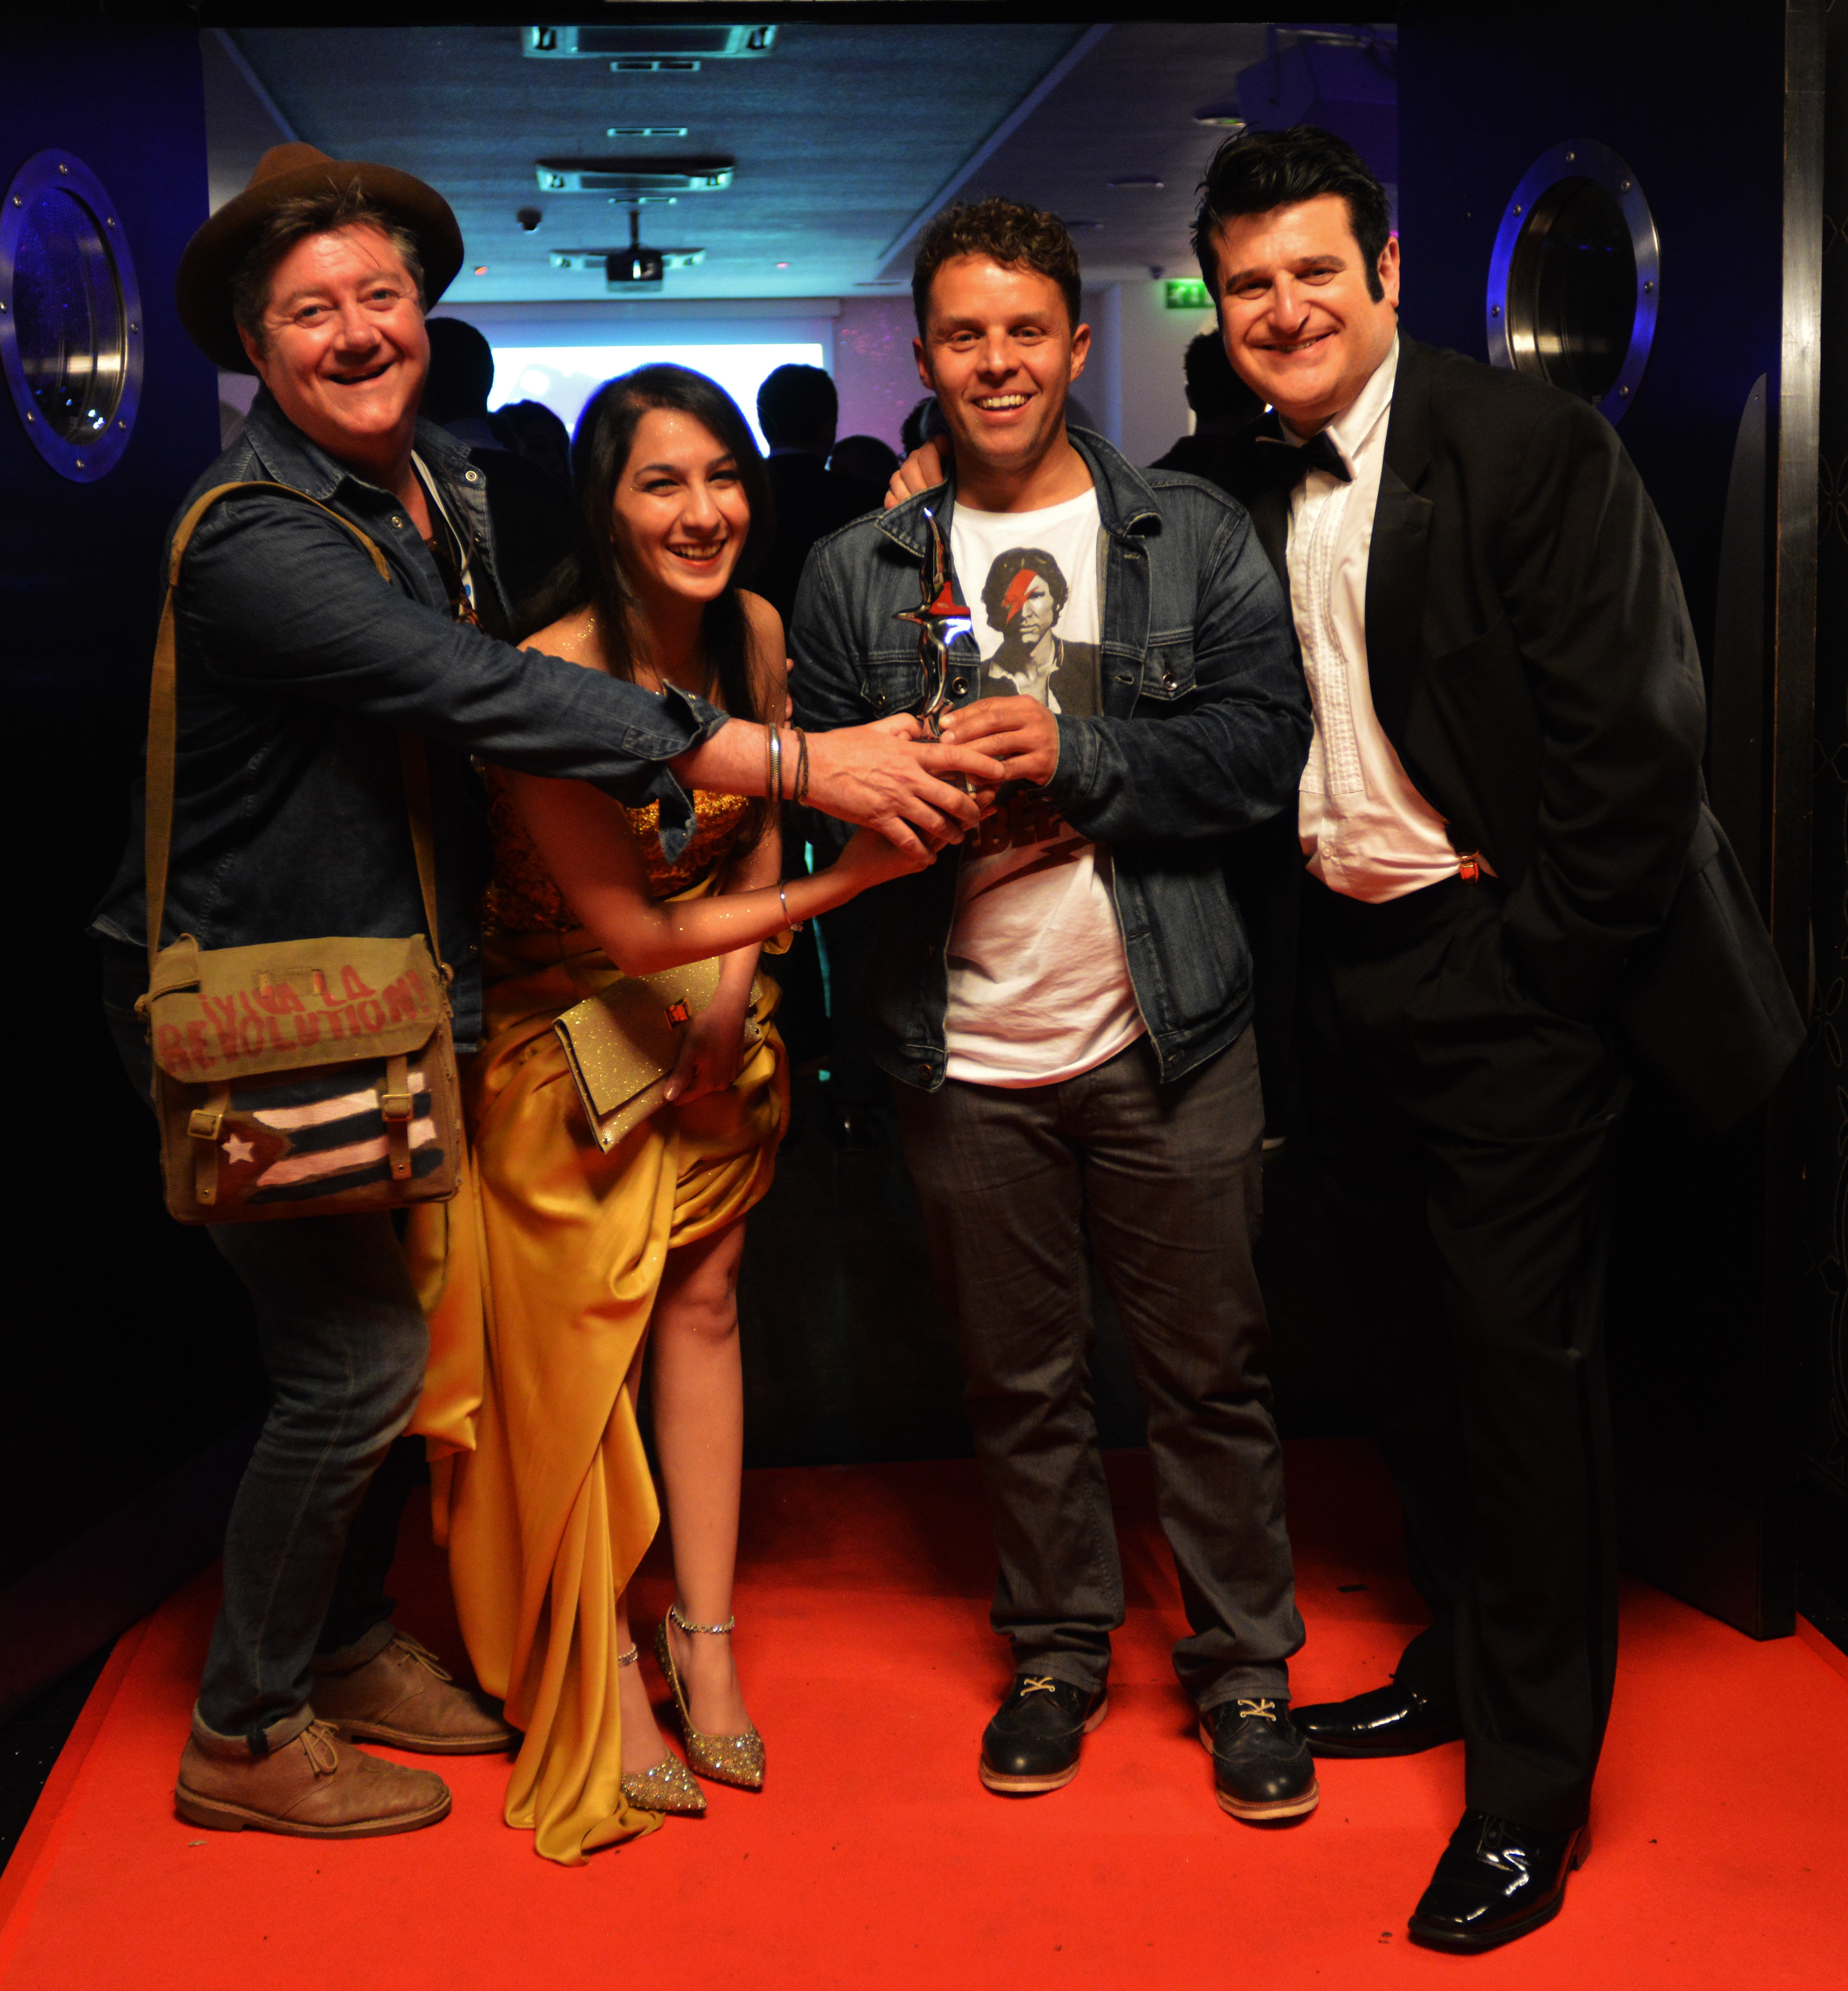 St Albans International Film Awards. England. 2014